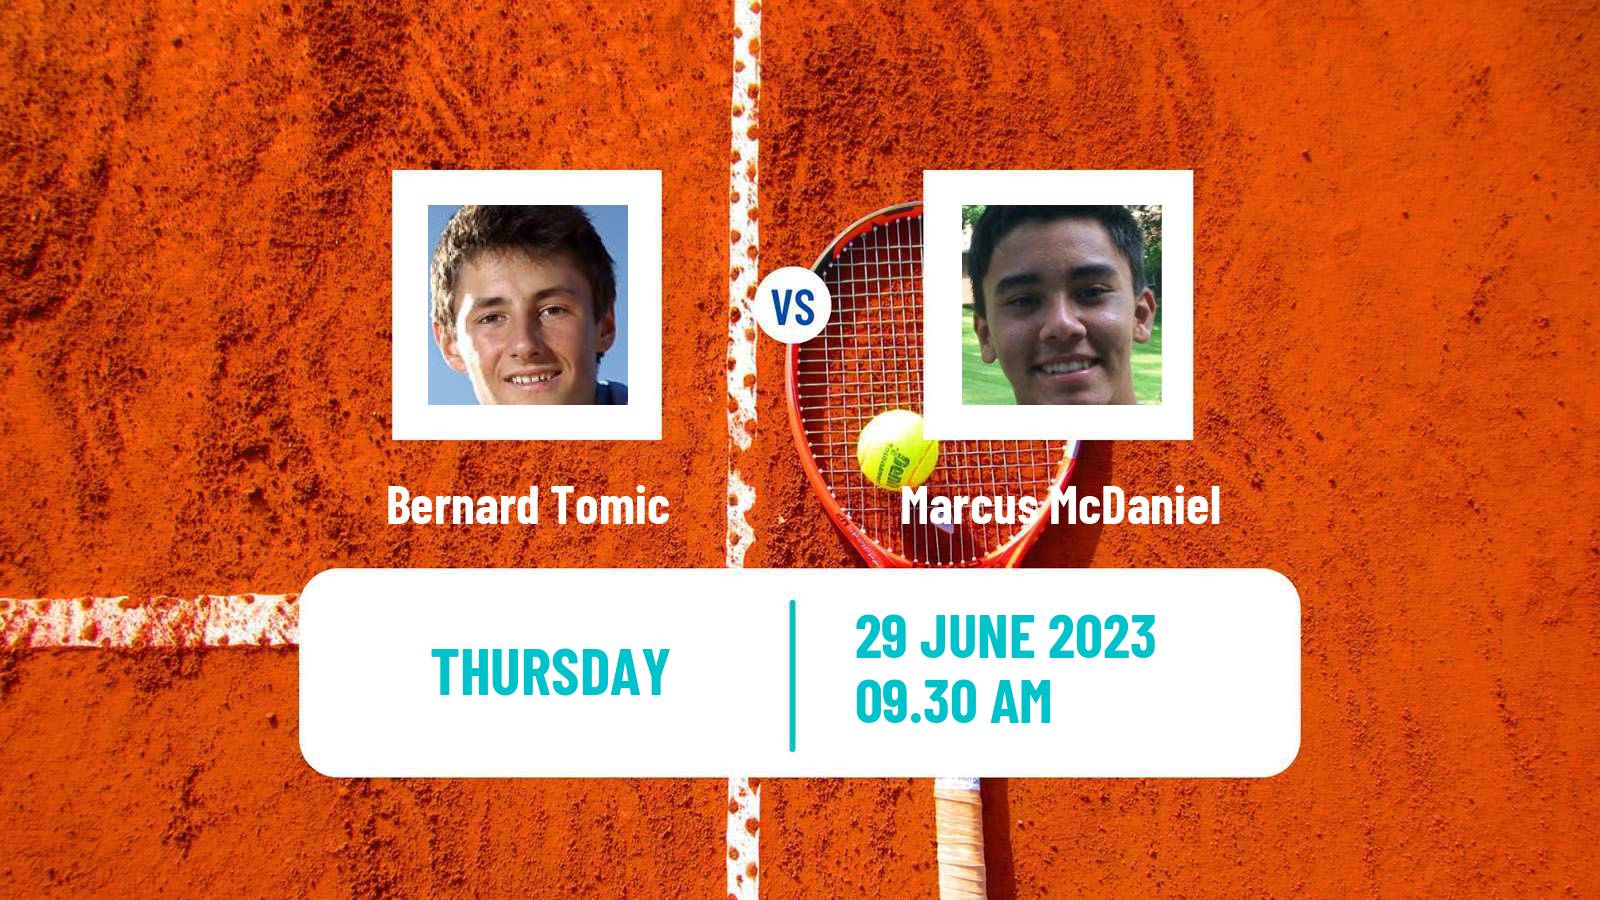 Tennis ITF M25 Santo Domingo 3 Men Bernard Tomic - Marcus McDaniel